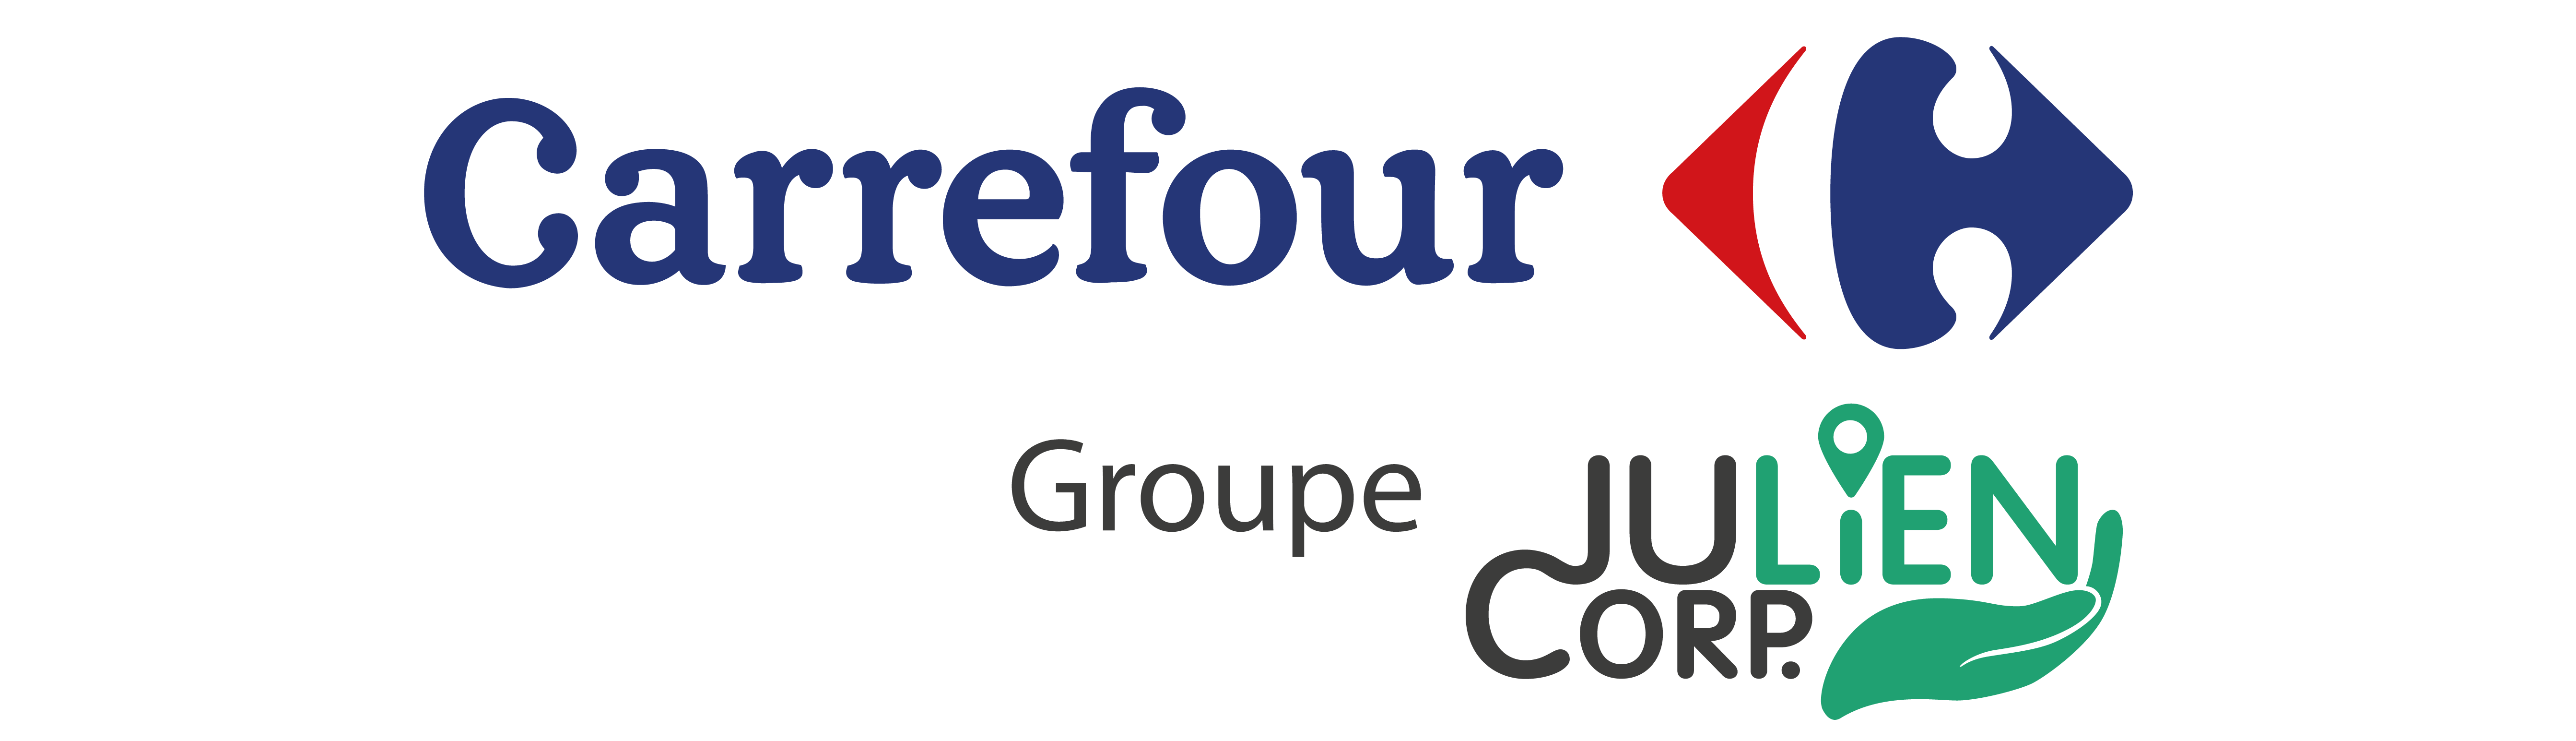 Carrefour Hyper Cherbourg Normandie Julien Corp